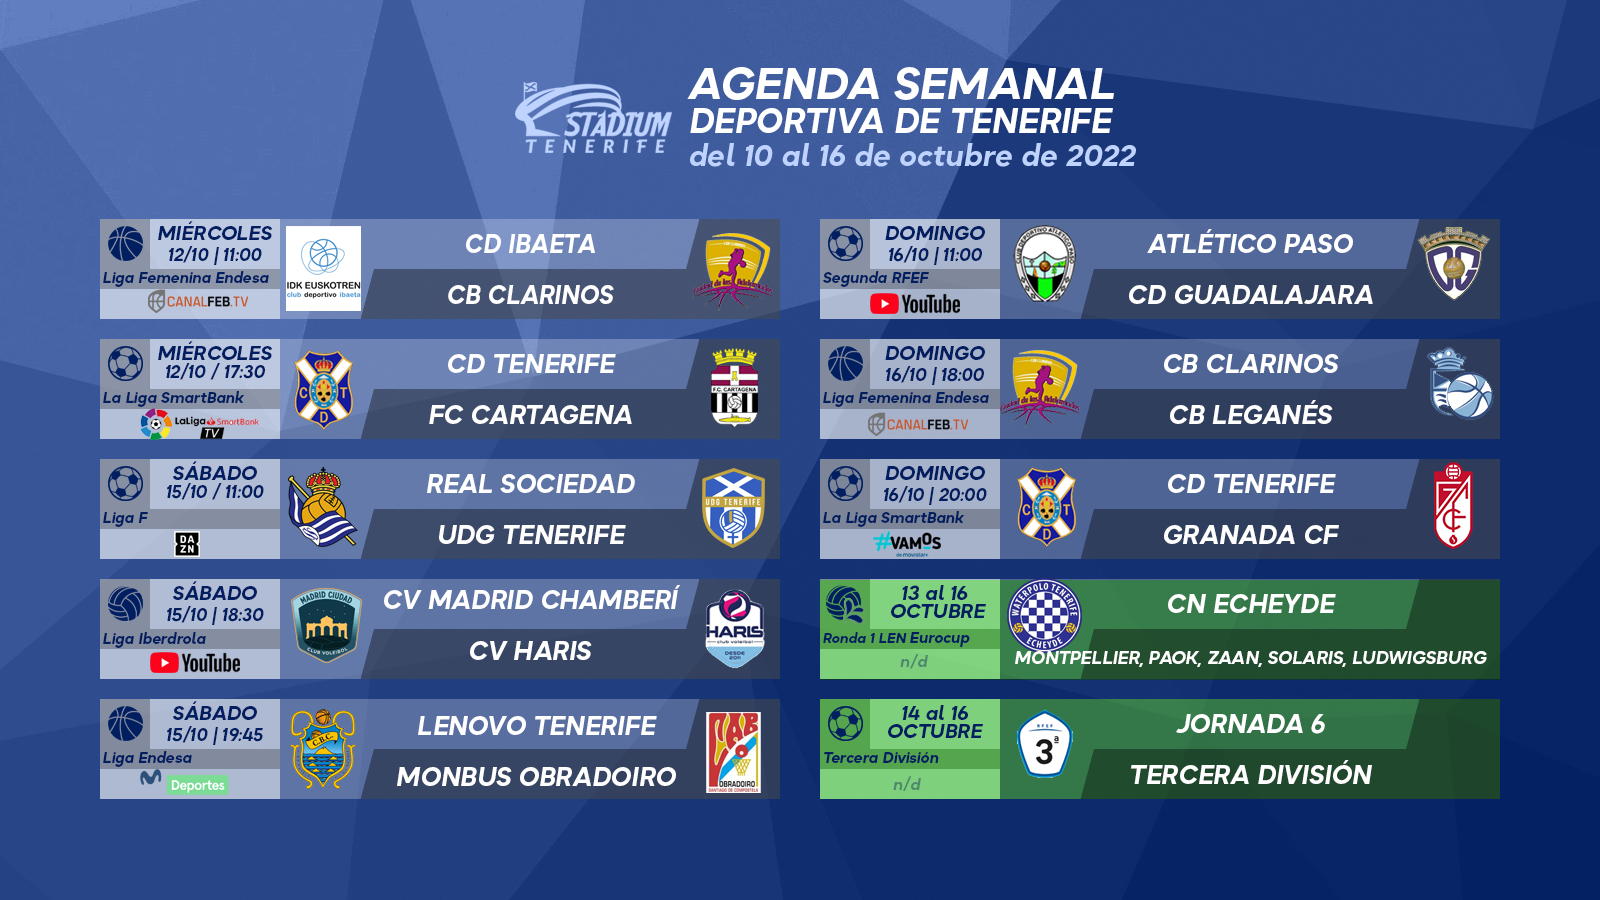 Agenda Semanal Deportiva de Tenerife (10 al 16 de octubre)